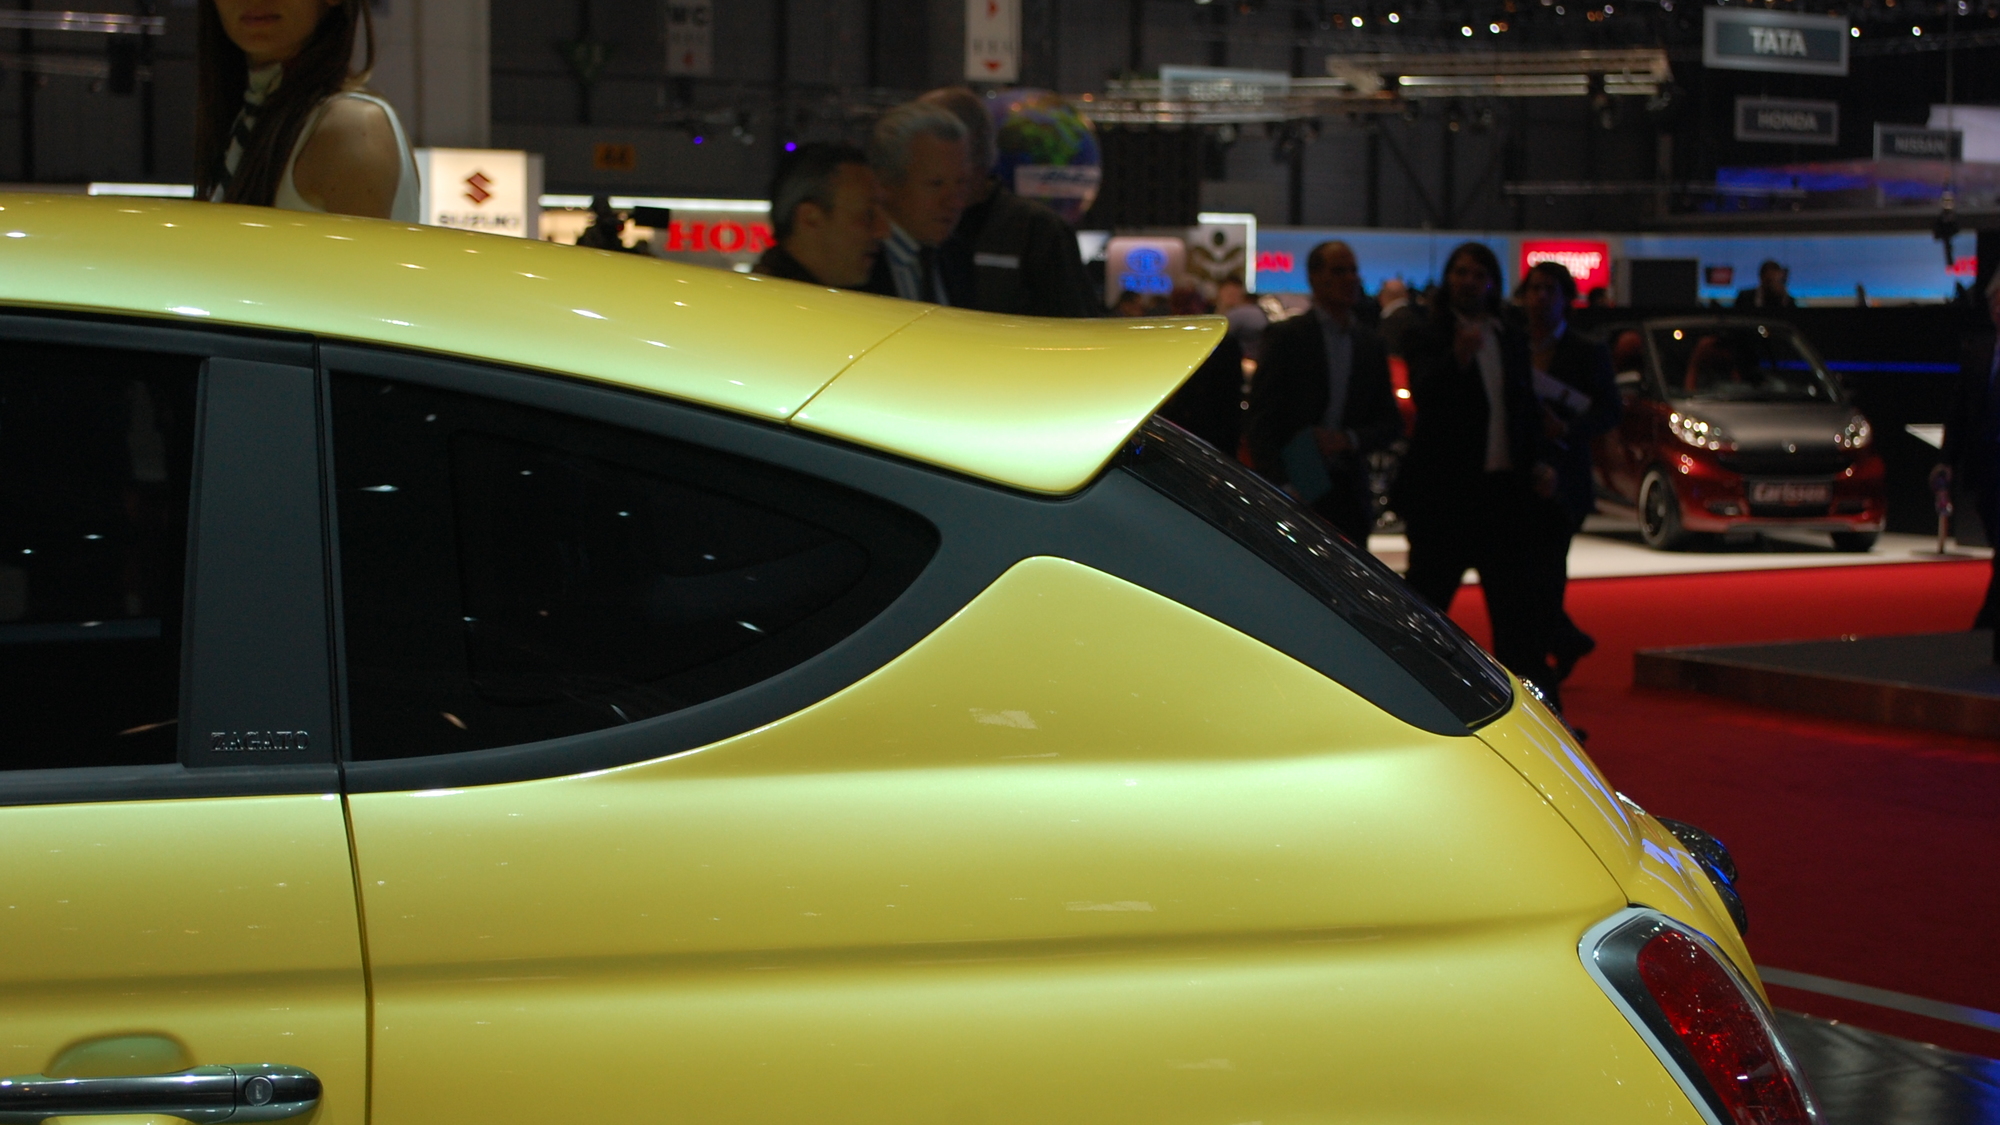 2011 Fiat 500 Coupe Zagato Concept. Photo by Vitesse Photography.